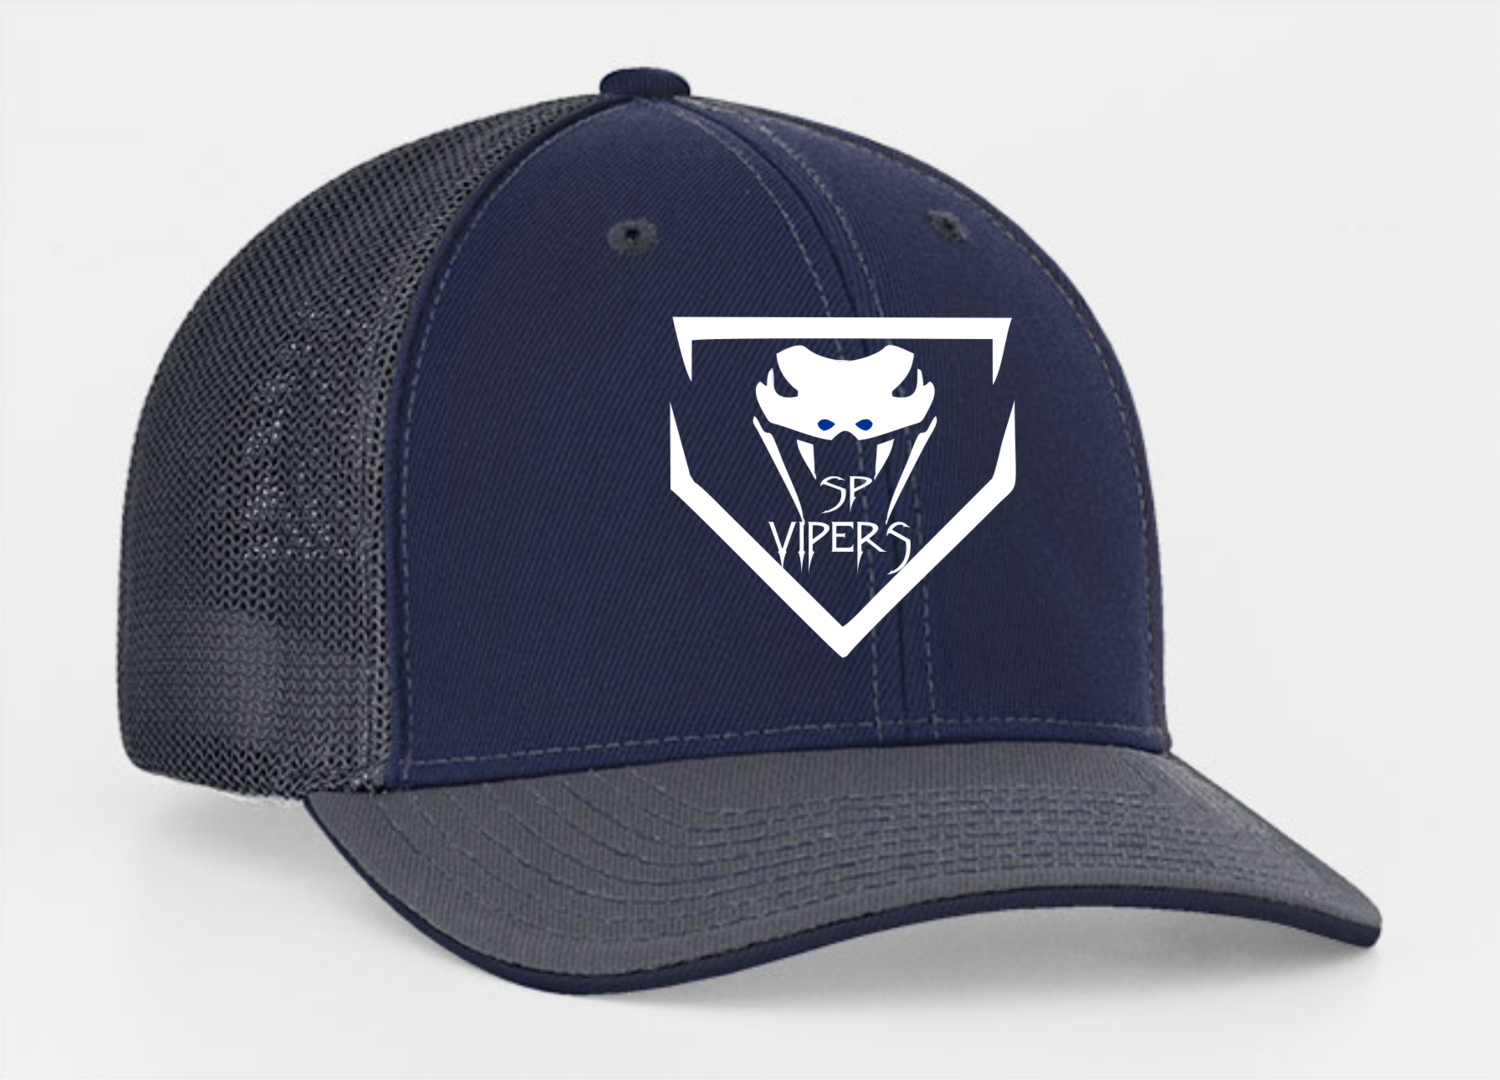 Navy & Graphite Vipers Flex-Fit Hat